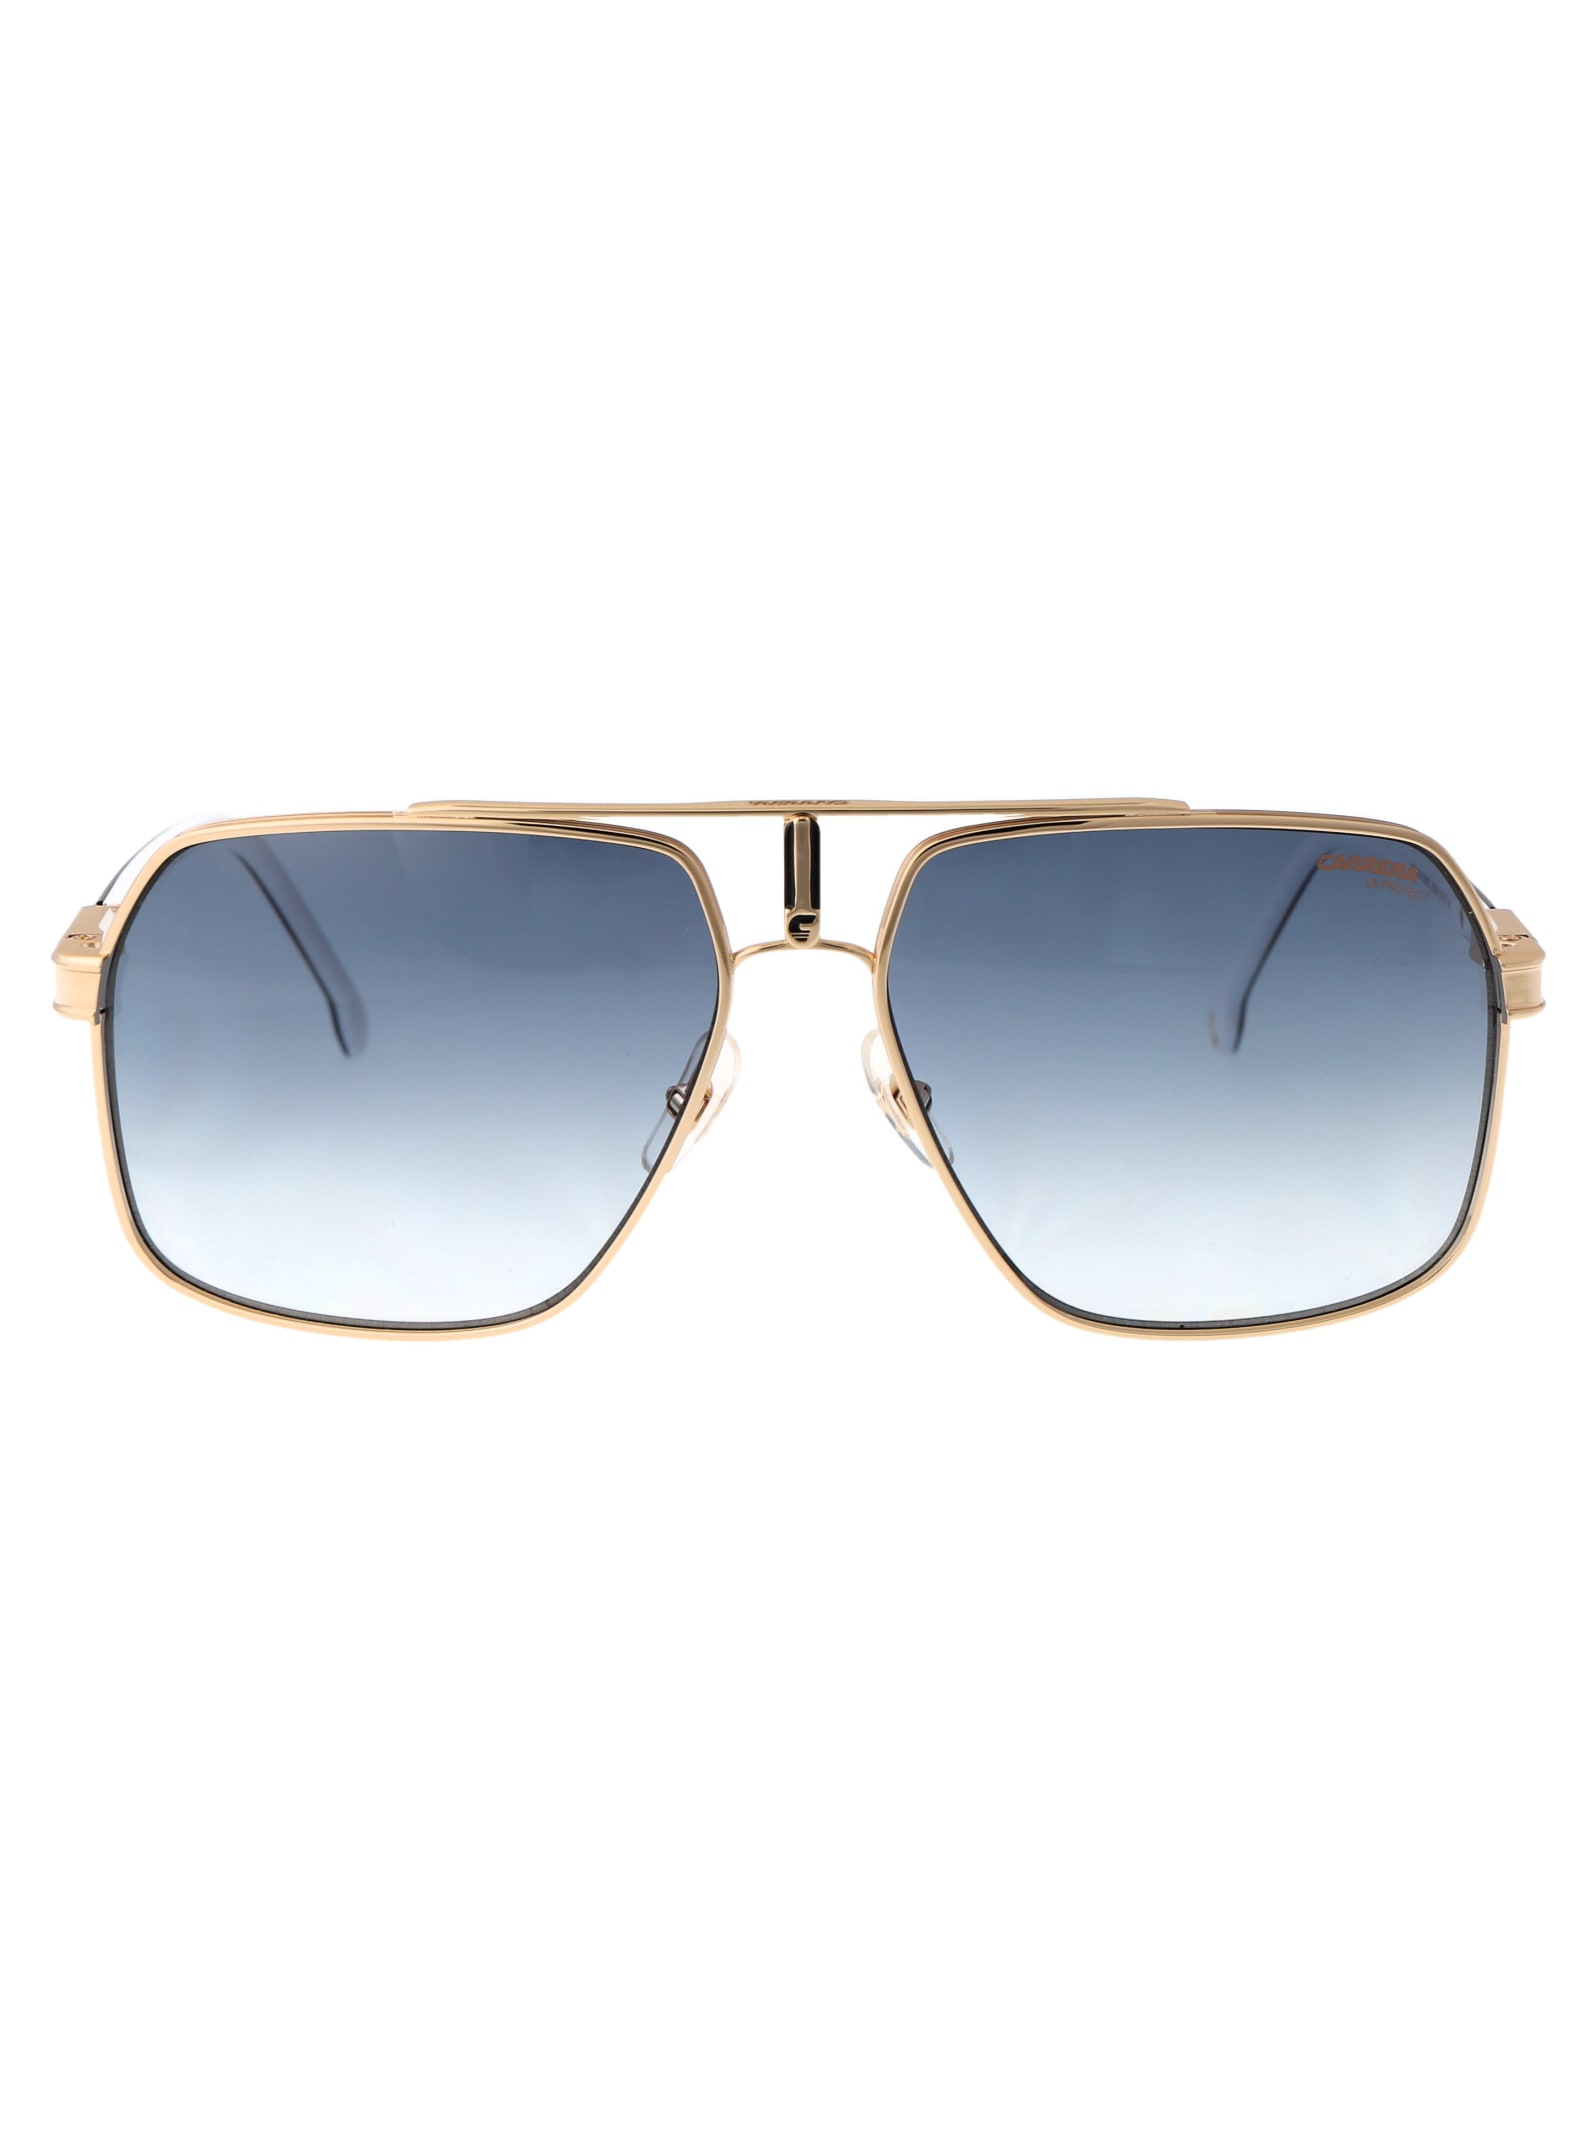 Carrera 1055/s Sunglasses